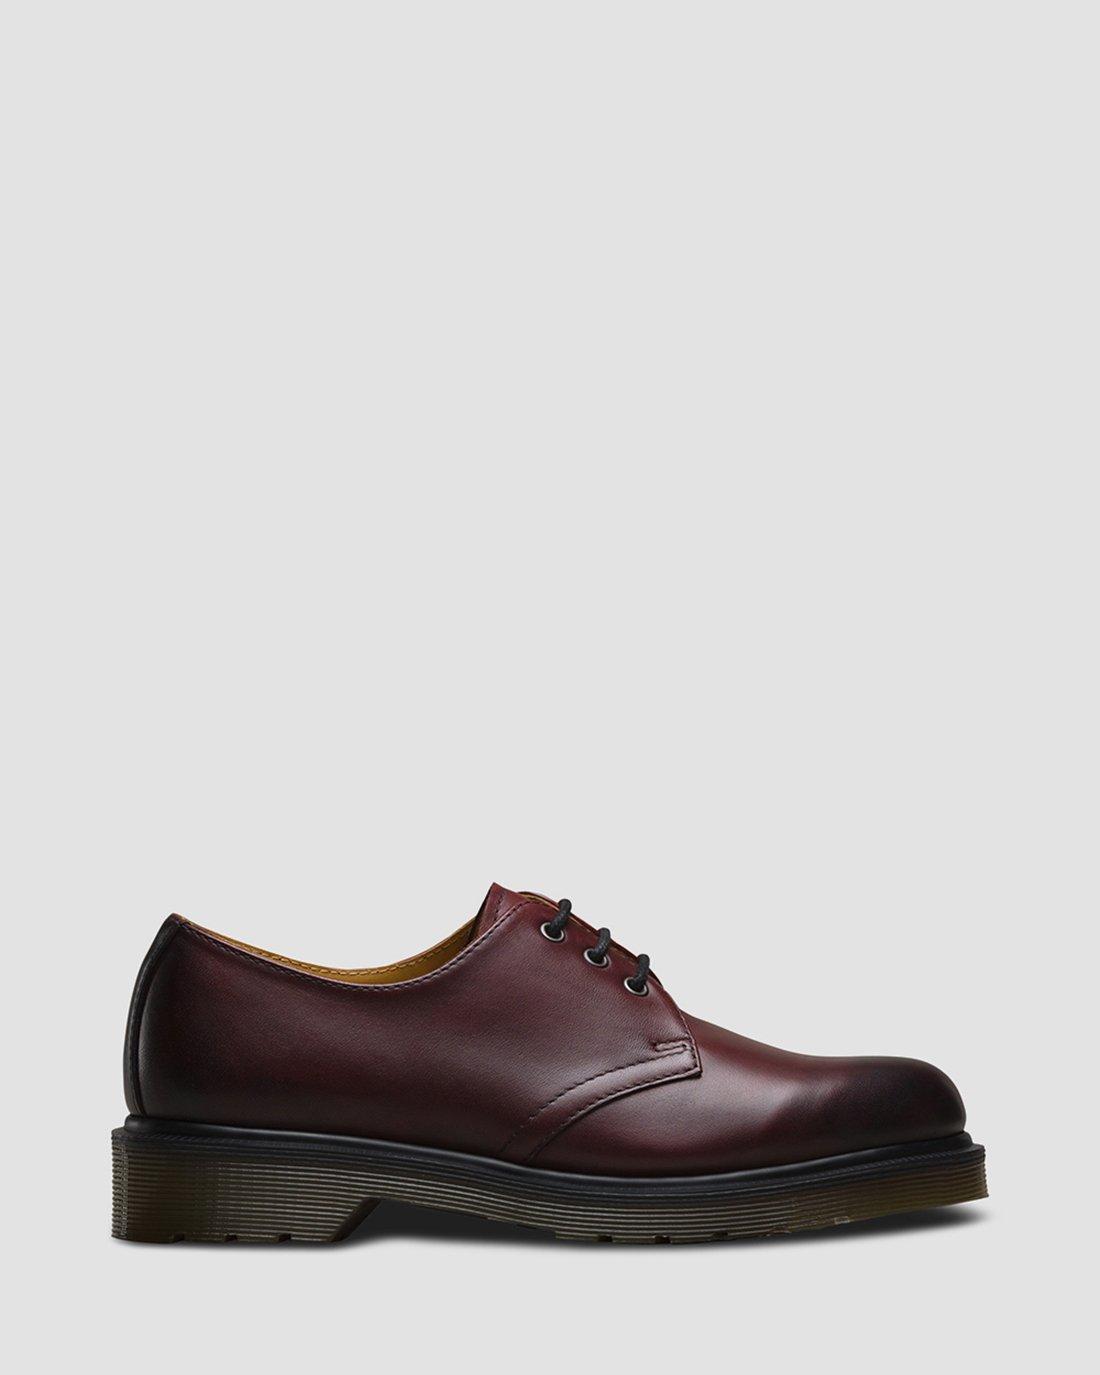 Martens 1461 Men's antique Temperley shoes Dr cherry red UK 9-UK 10 21153600